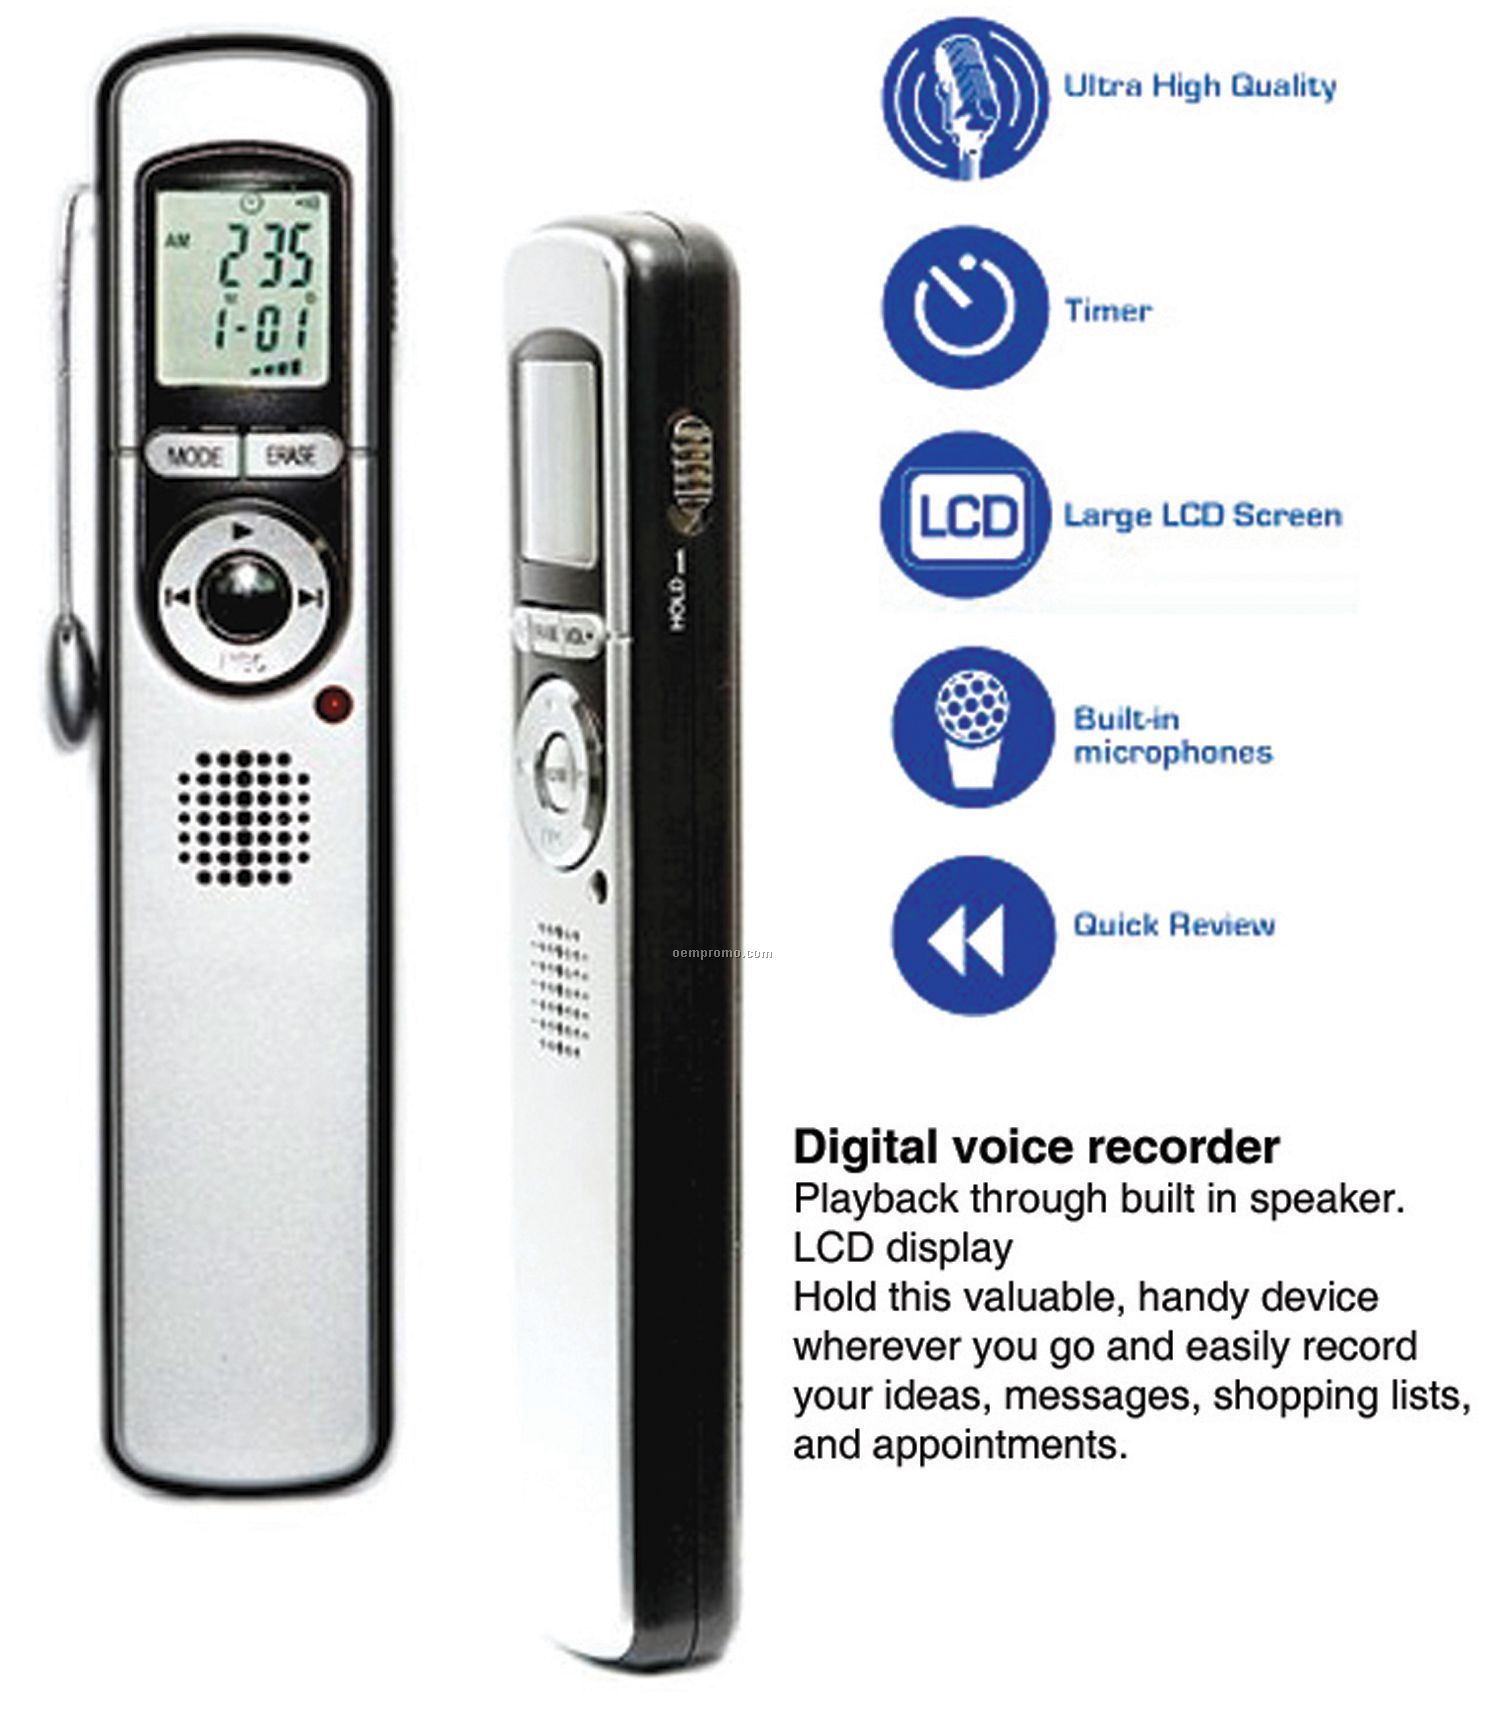 Digital Voice Recording - 2.5 Minutes Recording Time